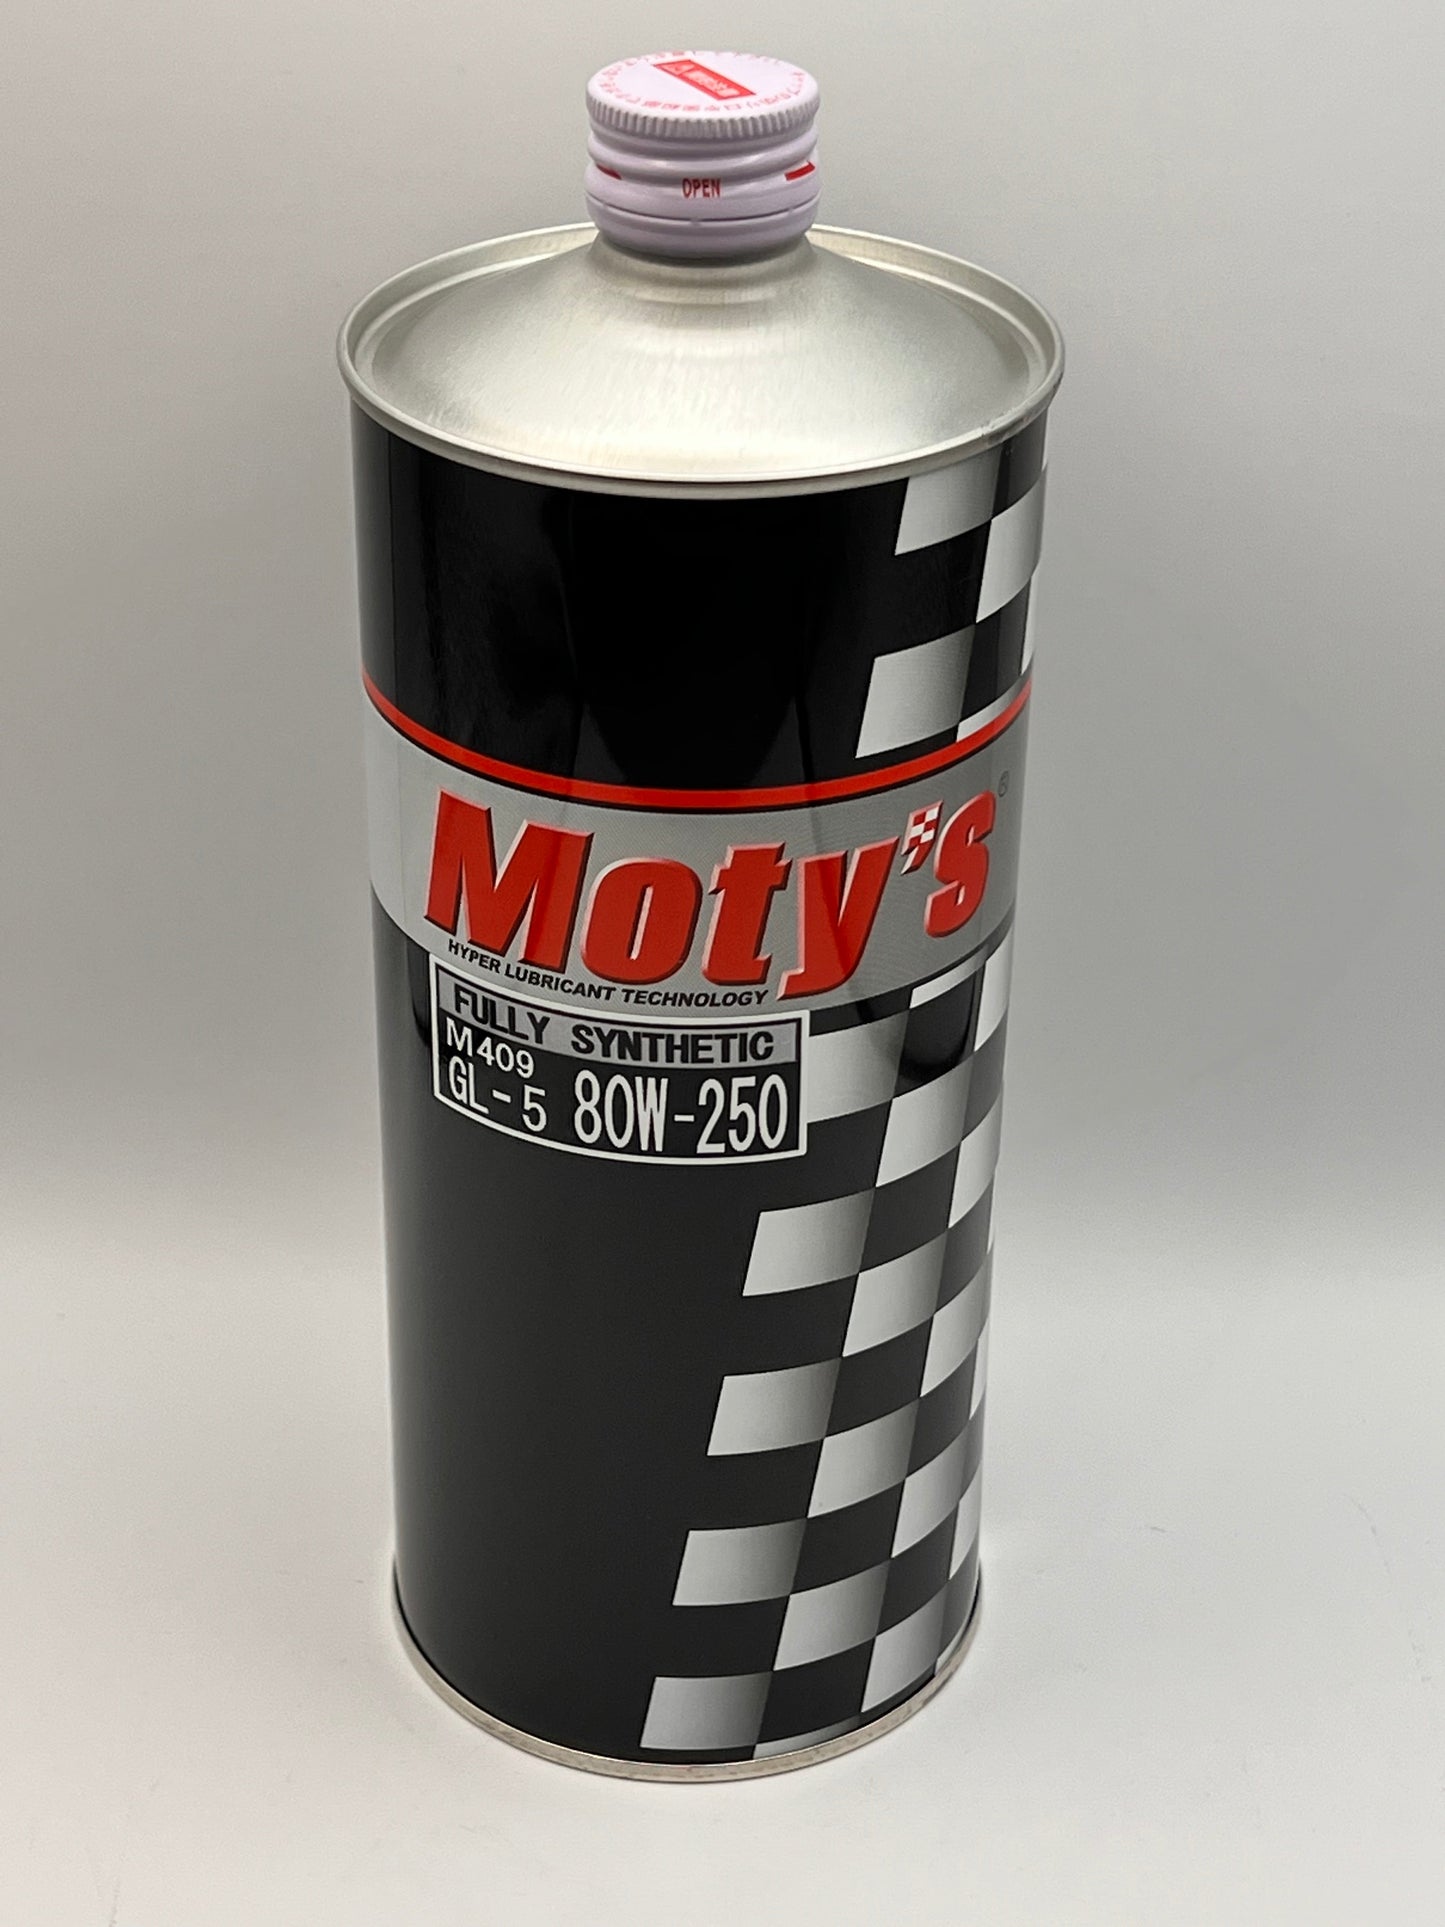 Moty's Gear Oil Full Synthetic M409 80W-250 1 Litres